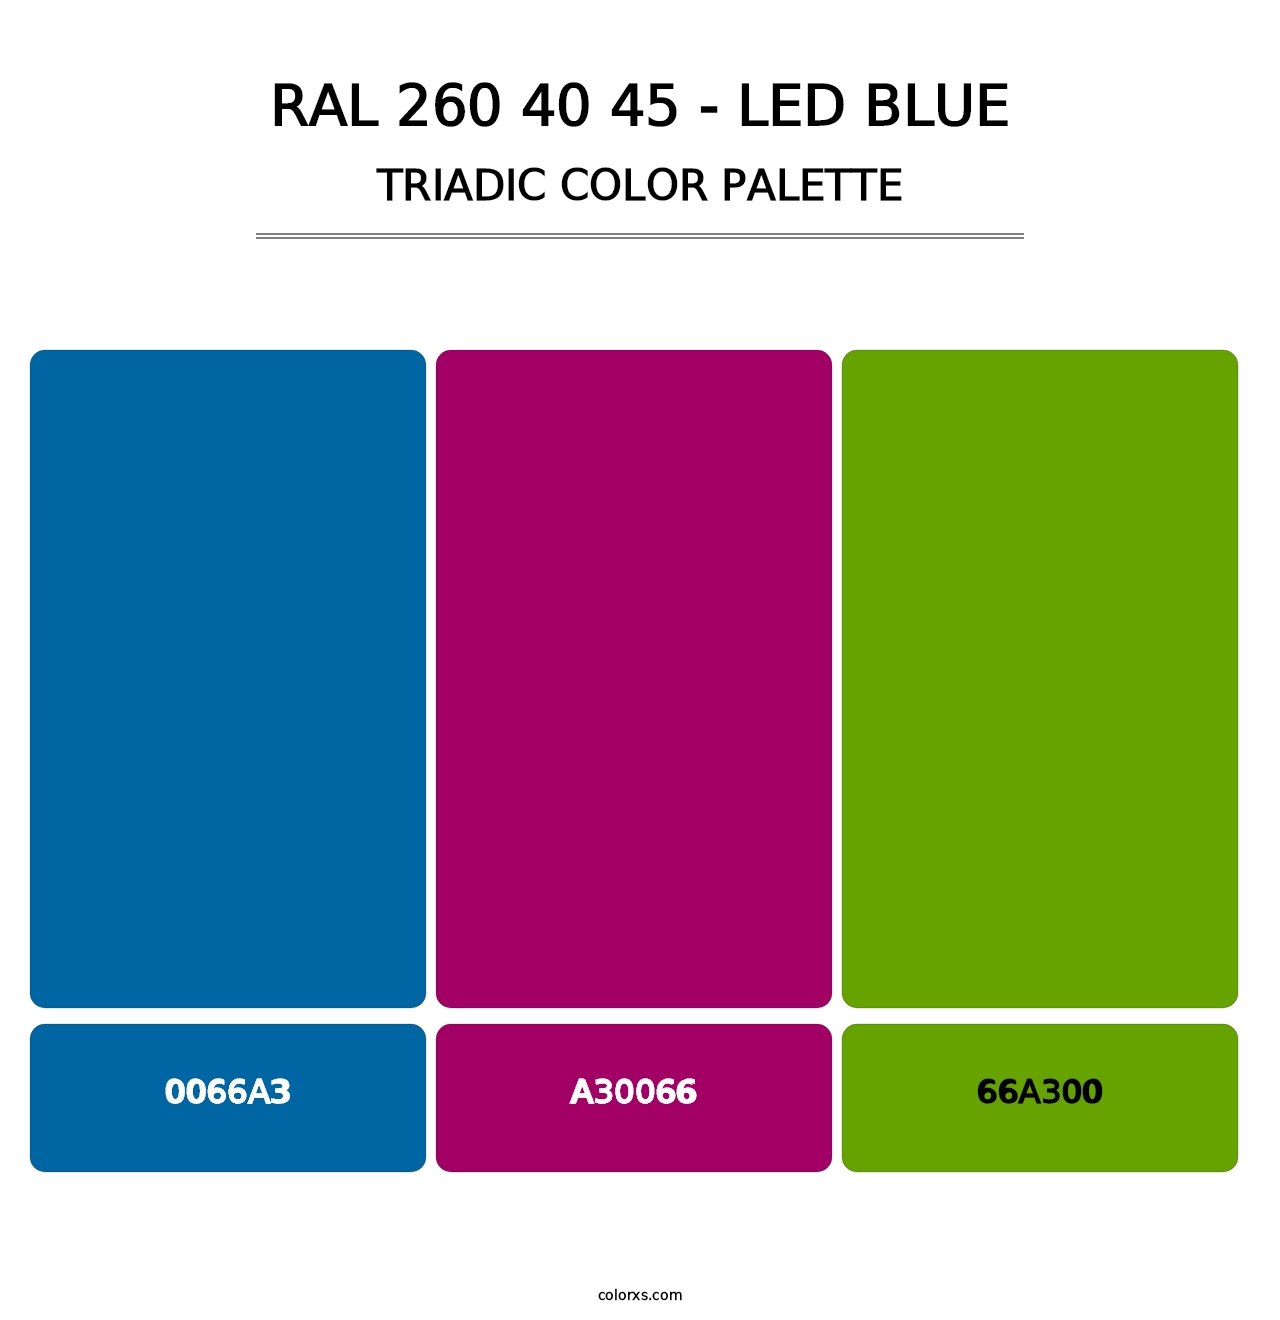 RAL 260 40 45 - LED Blue - Triadic Color Palette